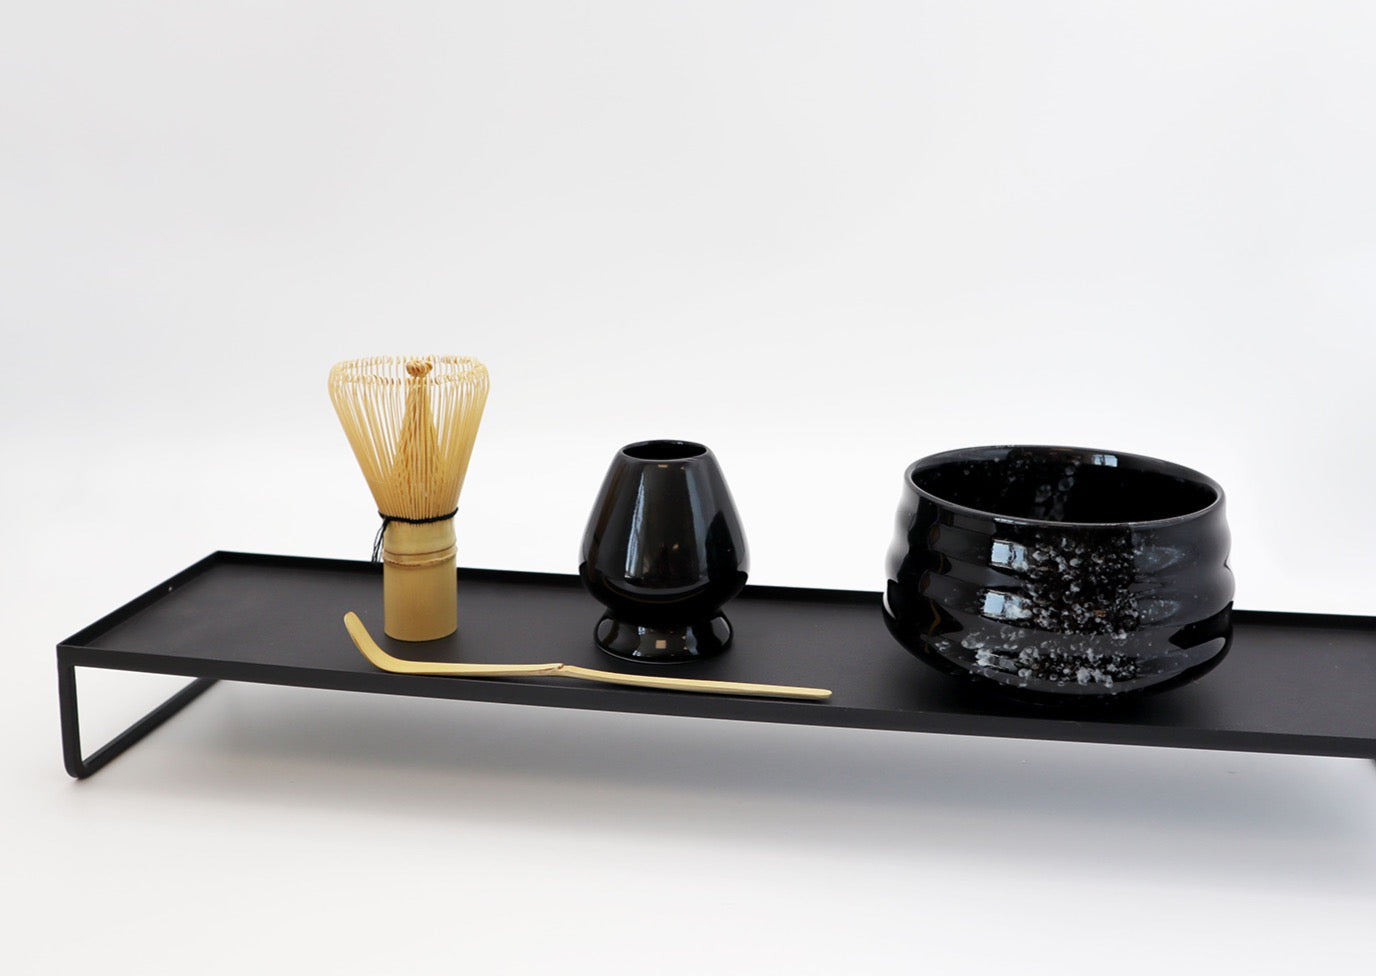 Japanese matcha tea ceremony kit with black bowl